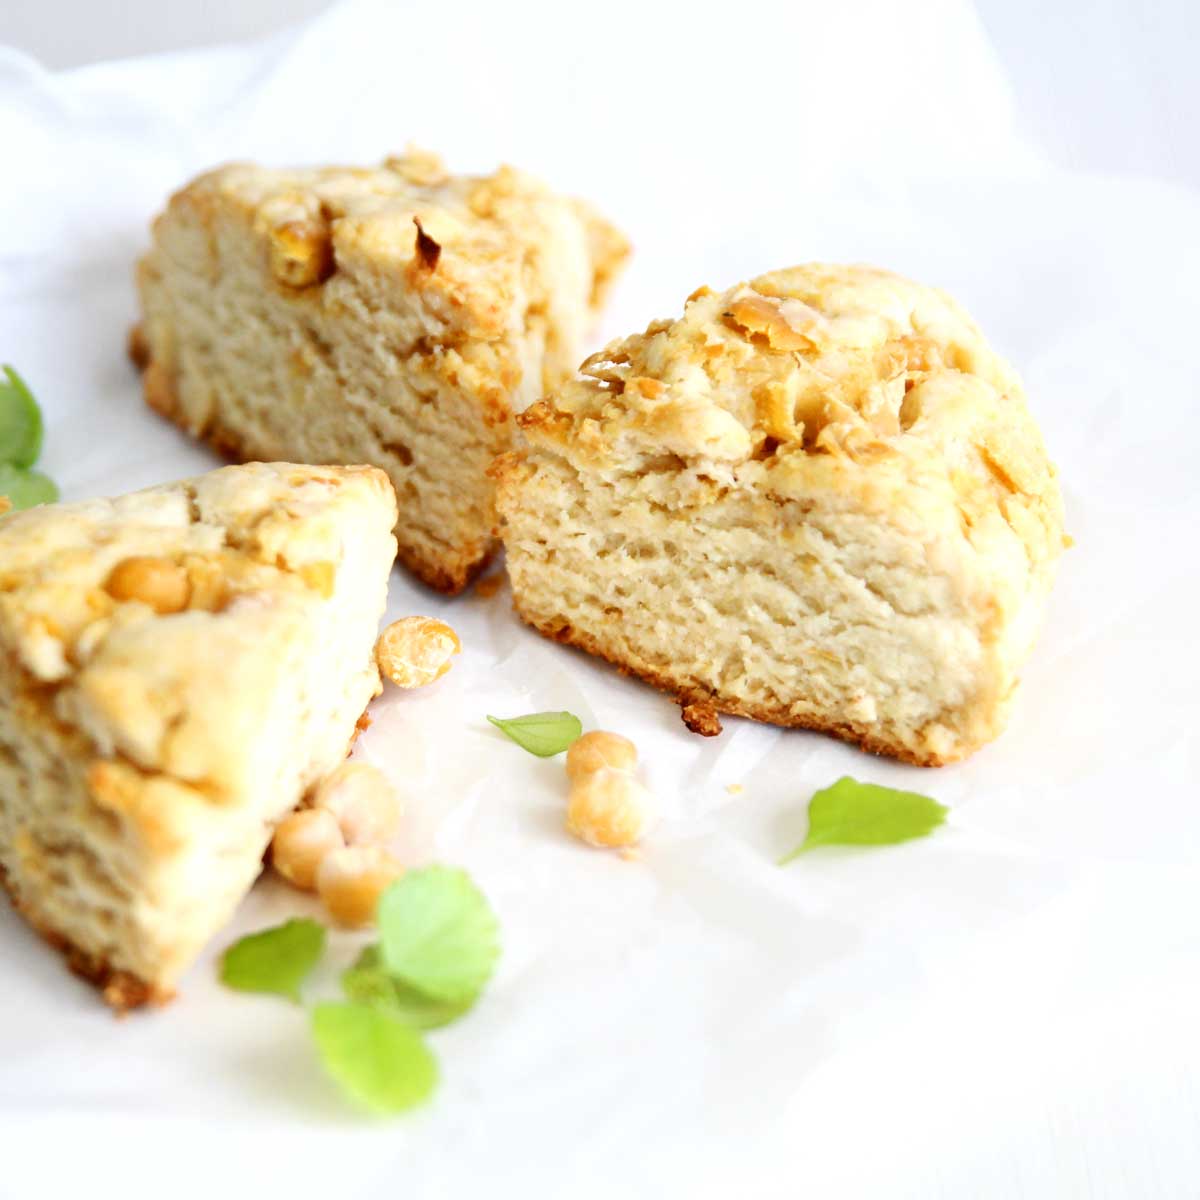 Homemade Chickpea Scones (Eggless, Vegan Recipe) - Cauliflower Everything Bagel Scones